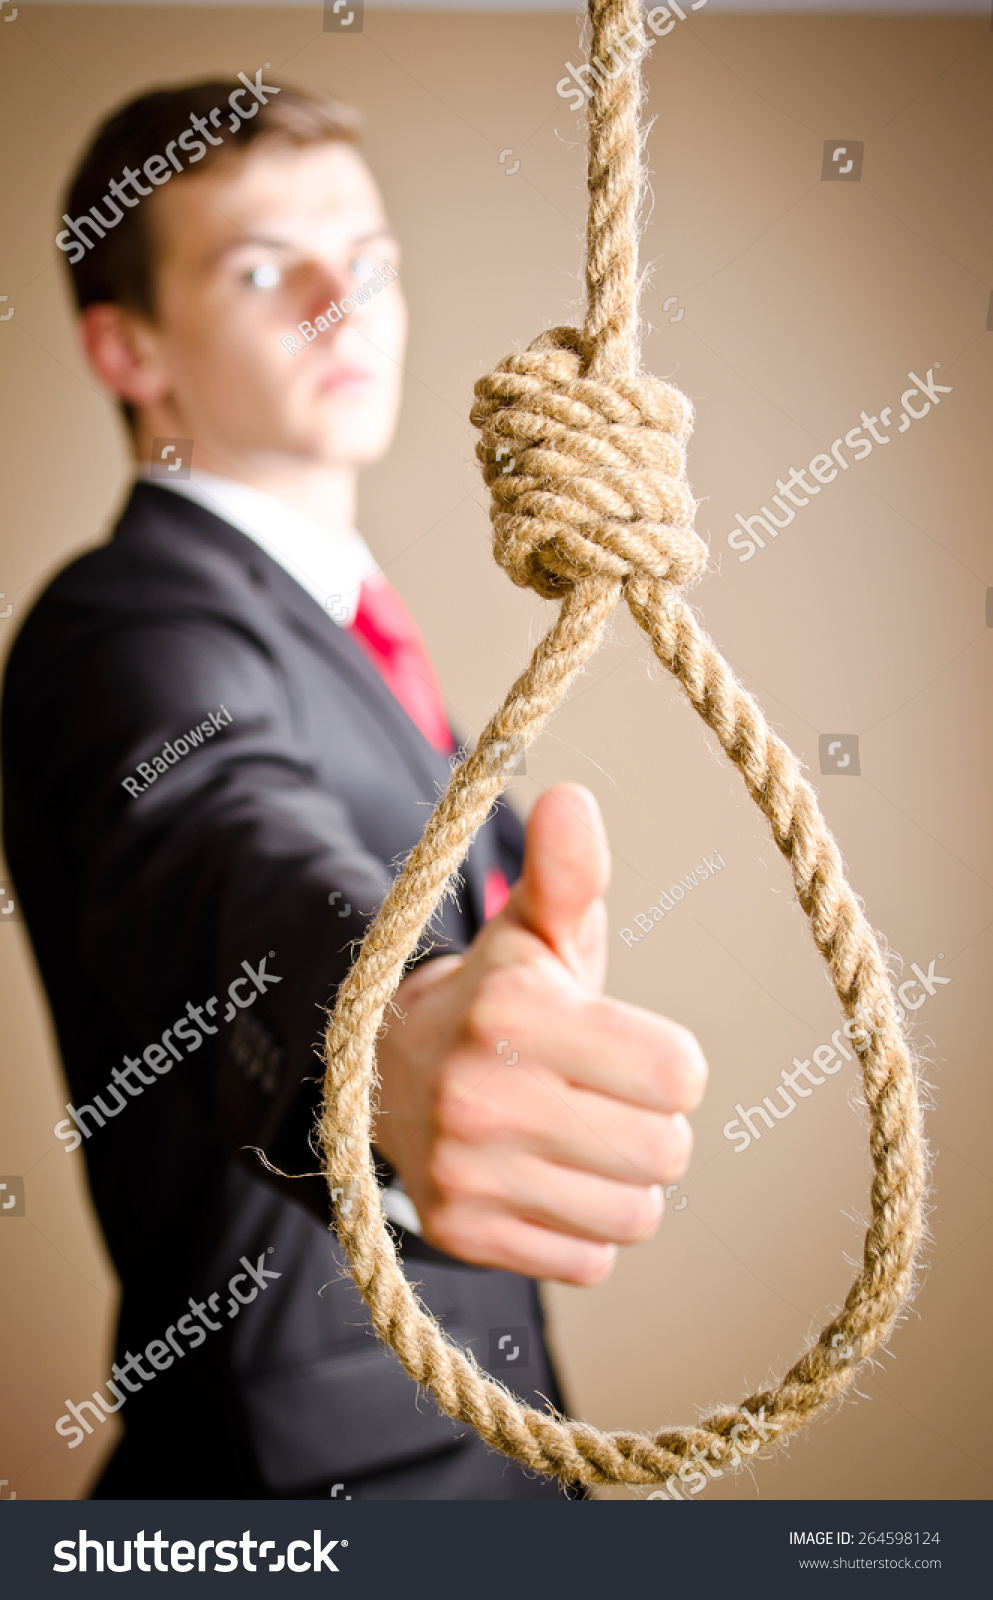 Image result for guy tying noose